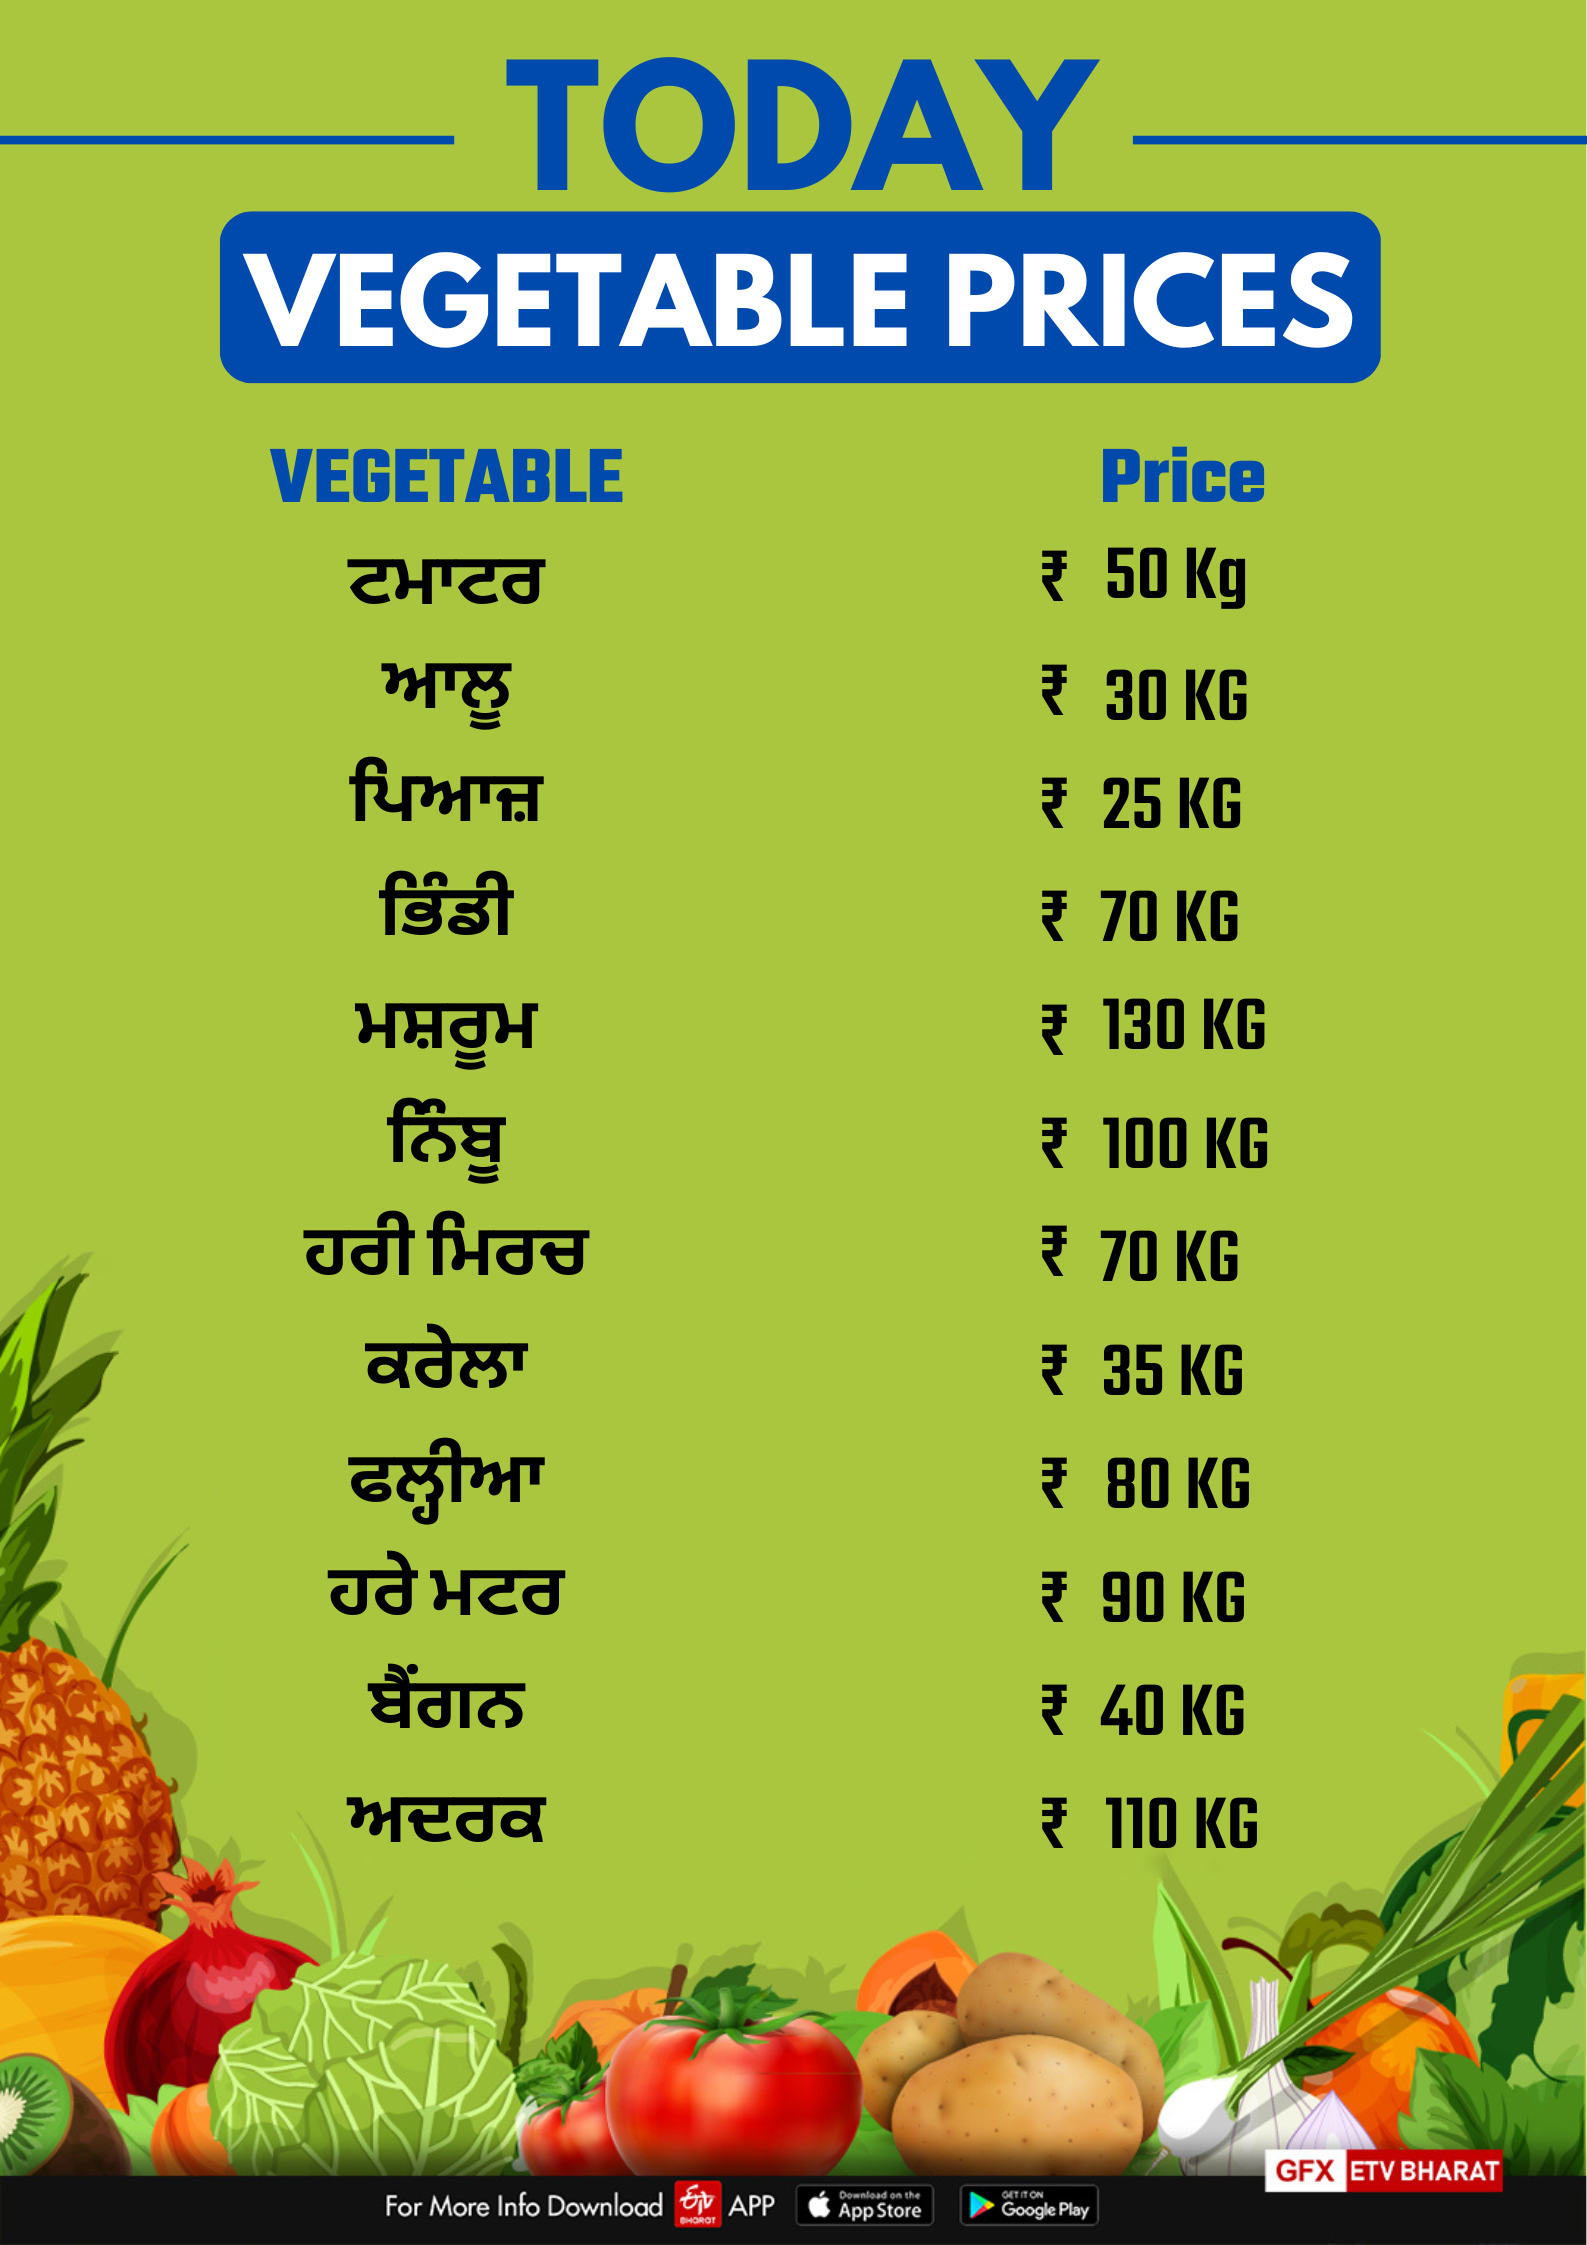 Vegetable rates